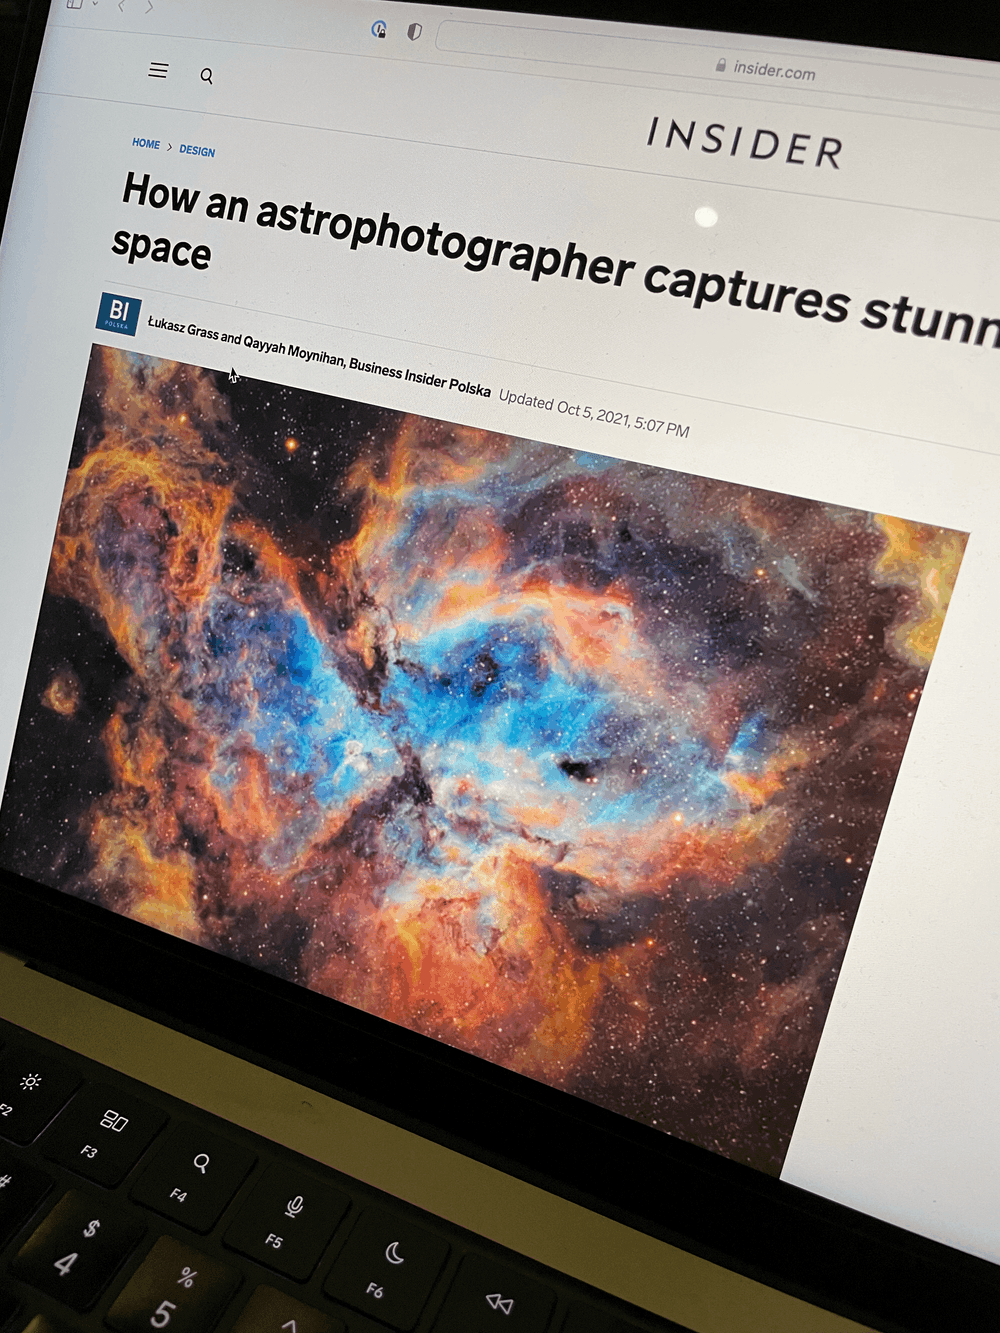 Insider.com: An astrophotographer explains how he captures stunning photos of our solar system